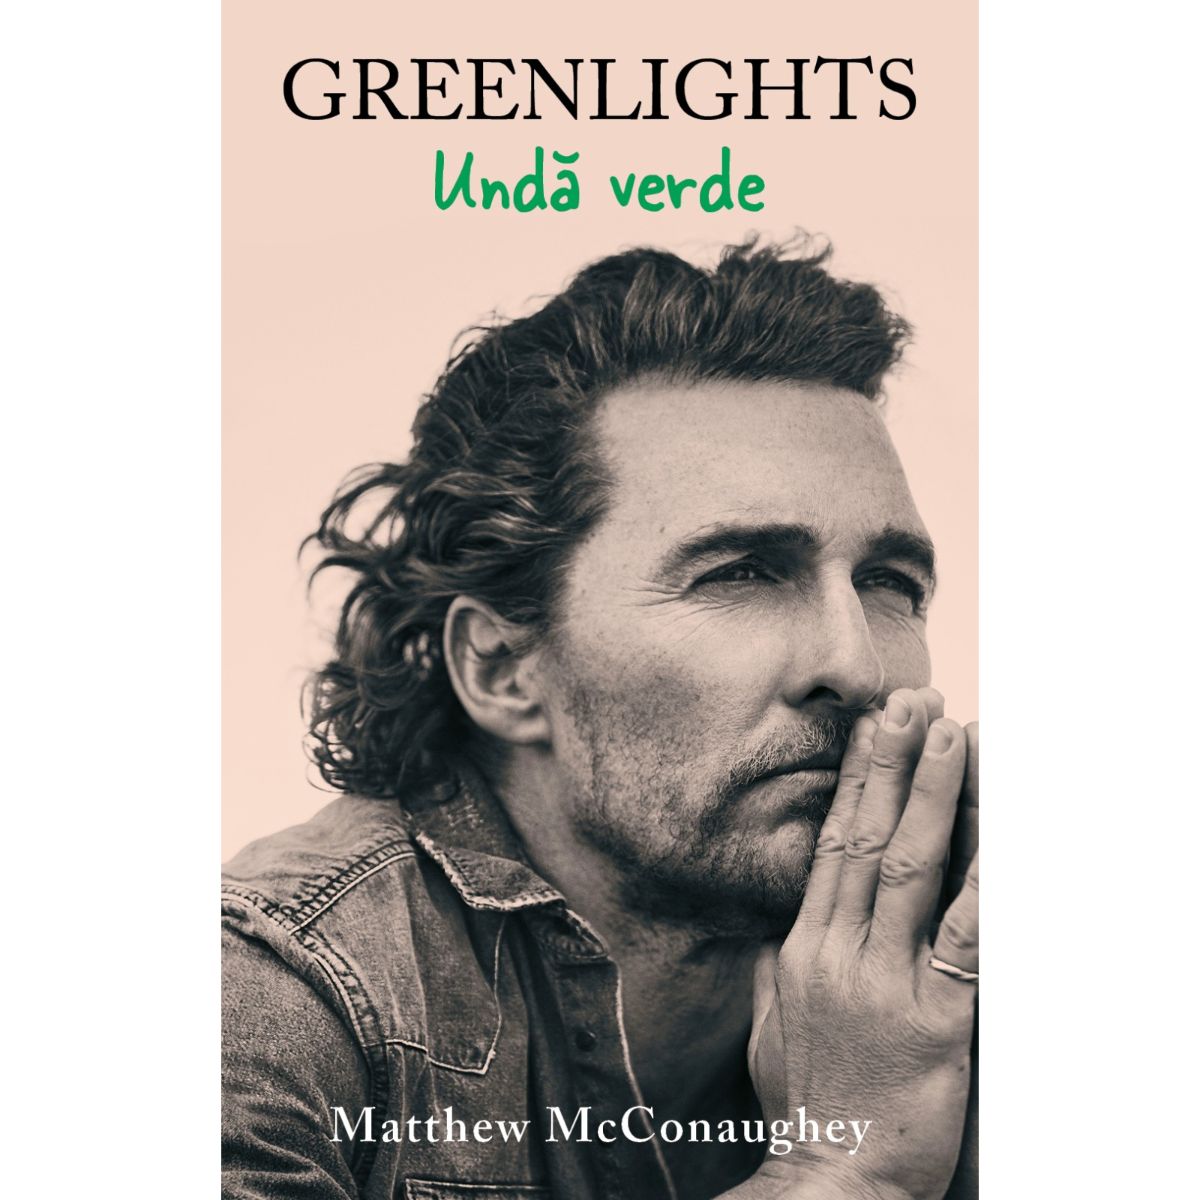 Unda verde, Matthew Mcconaughey